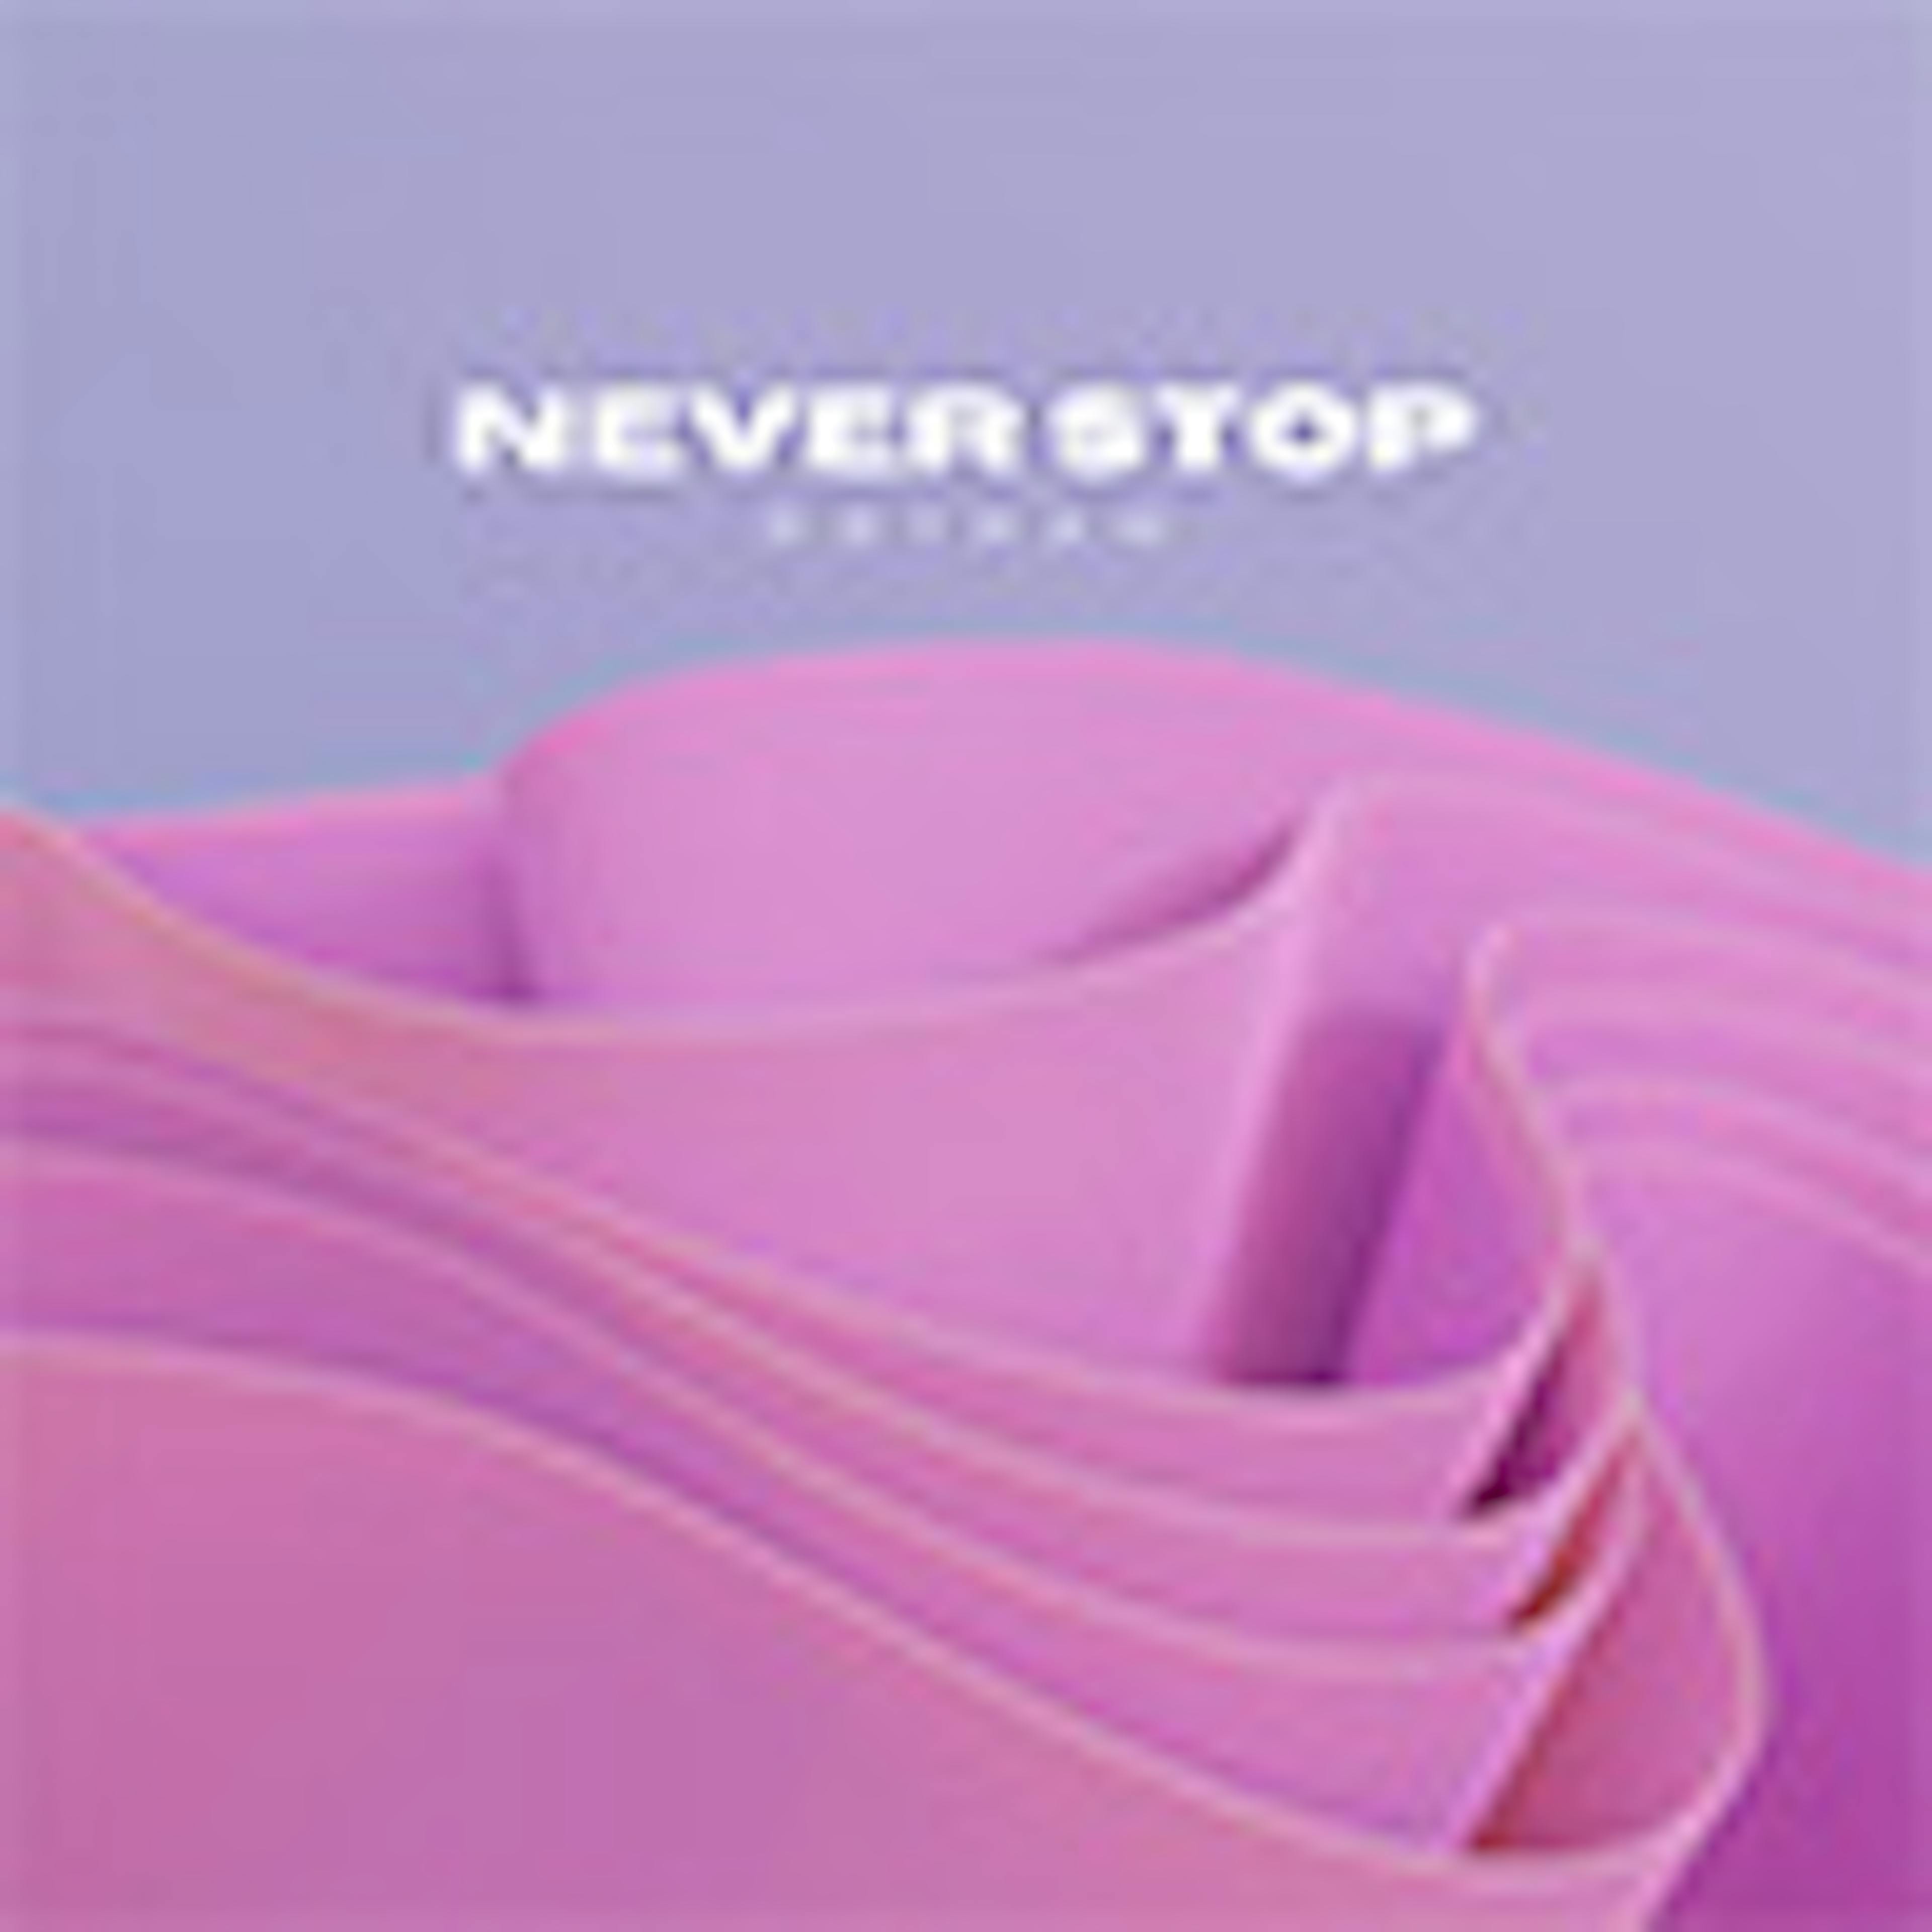 Never Stop album cover